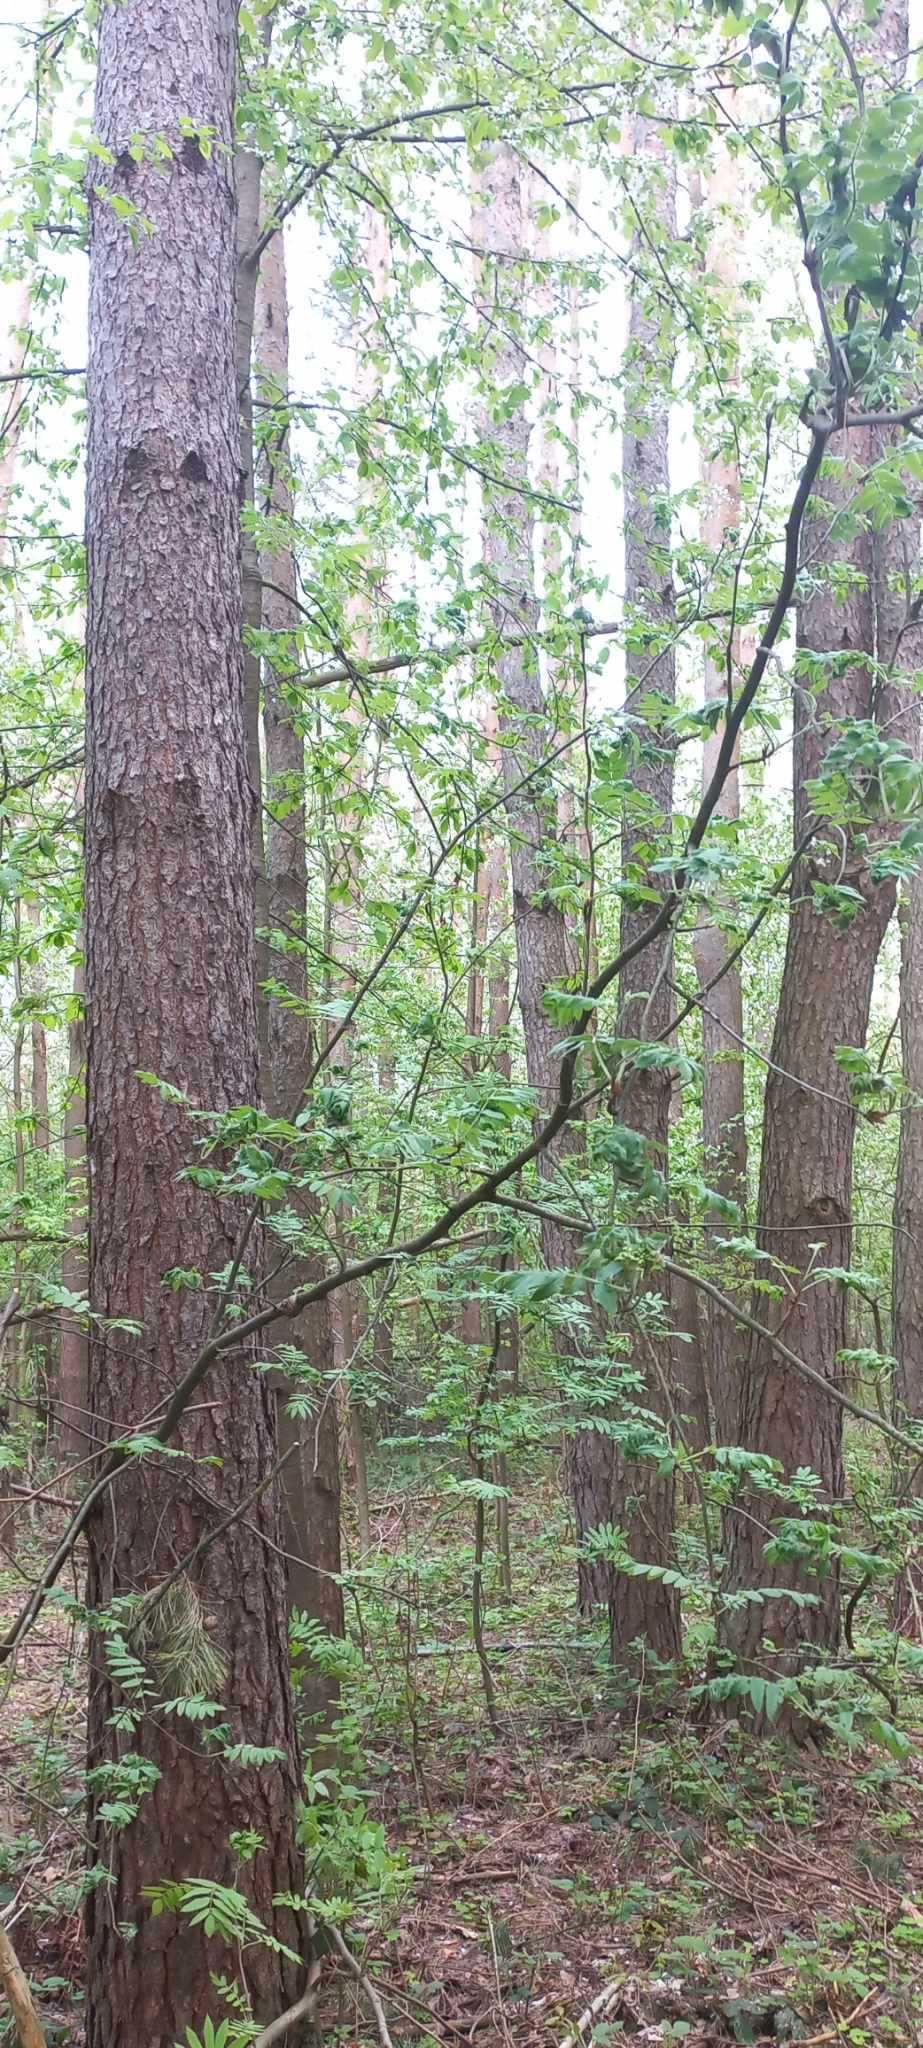 Działka leśna, las, drzewostan 60-lat